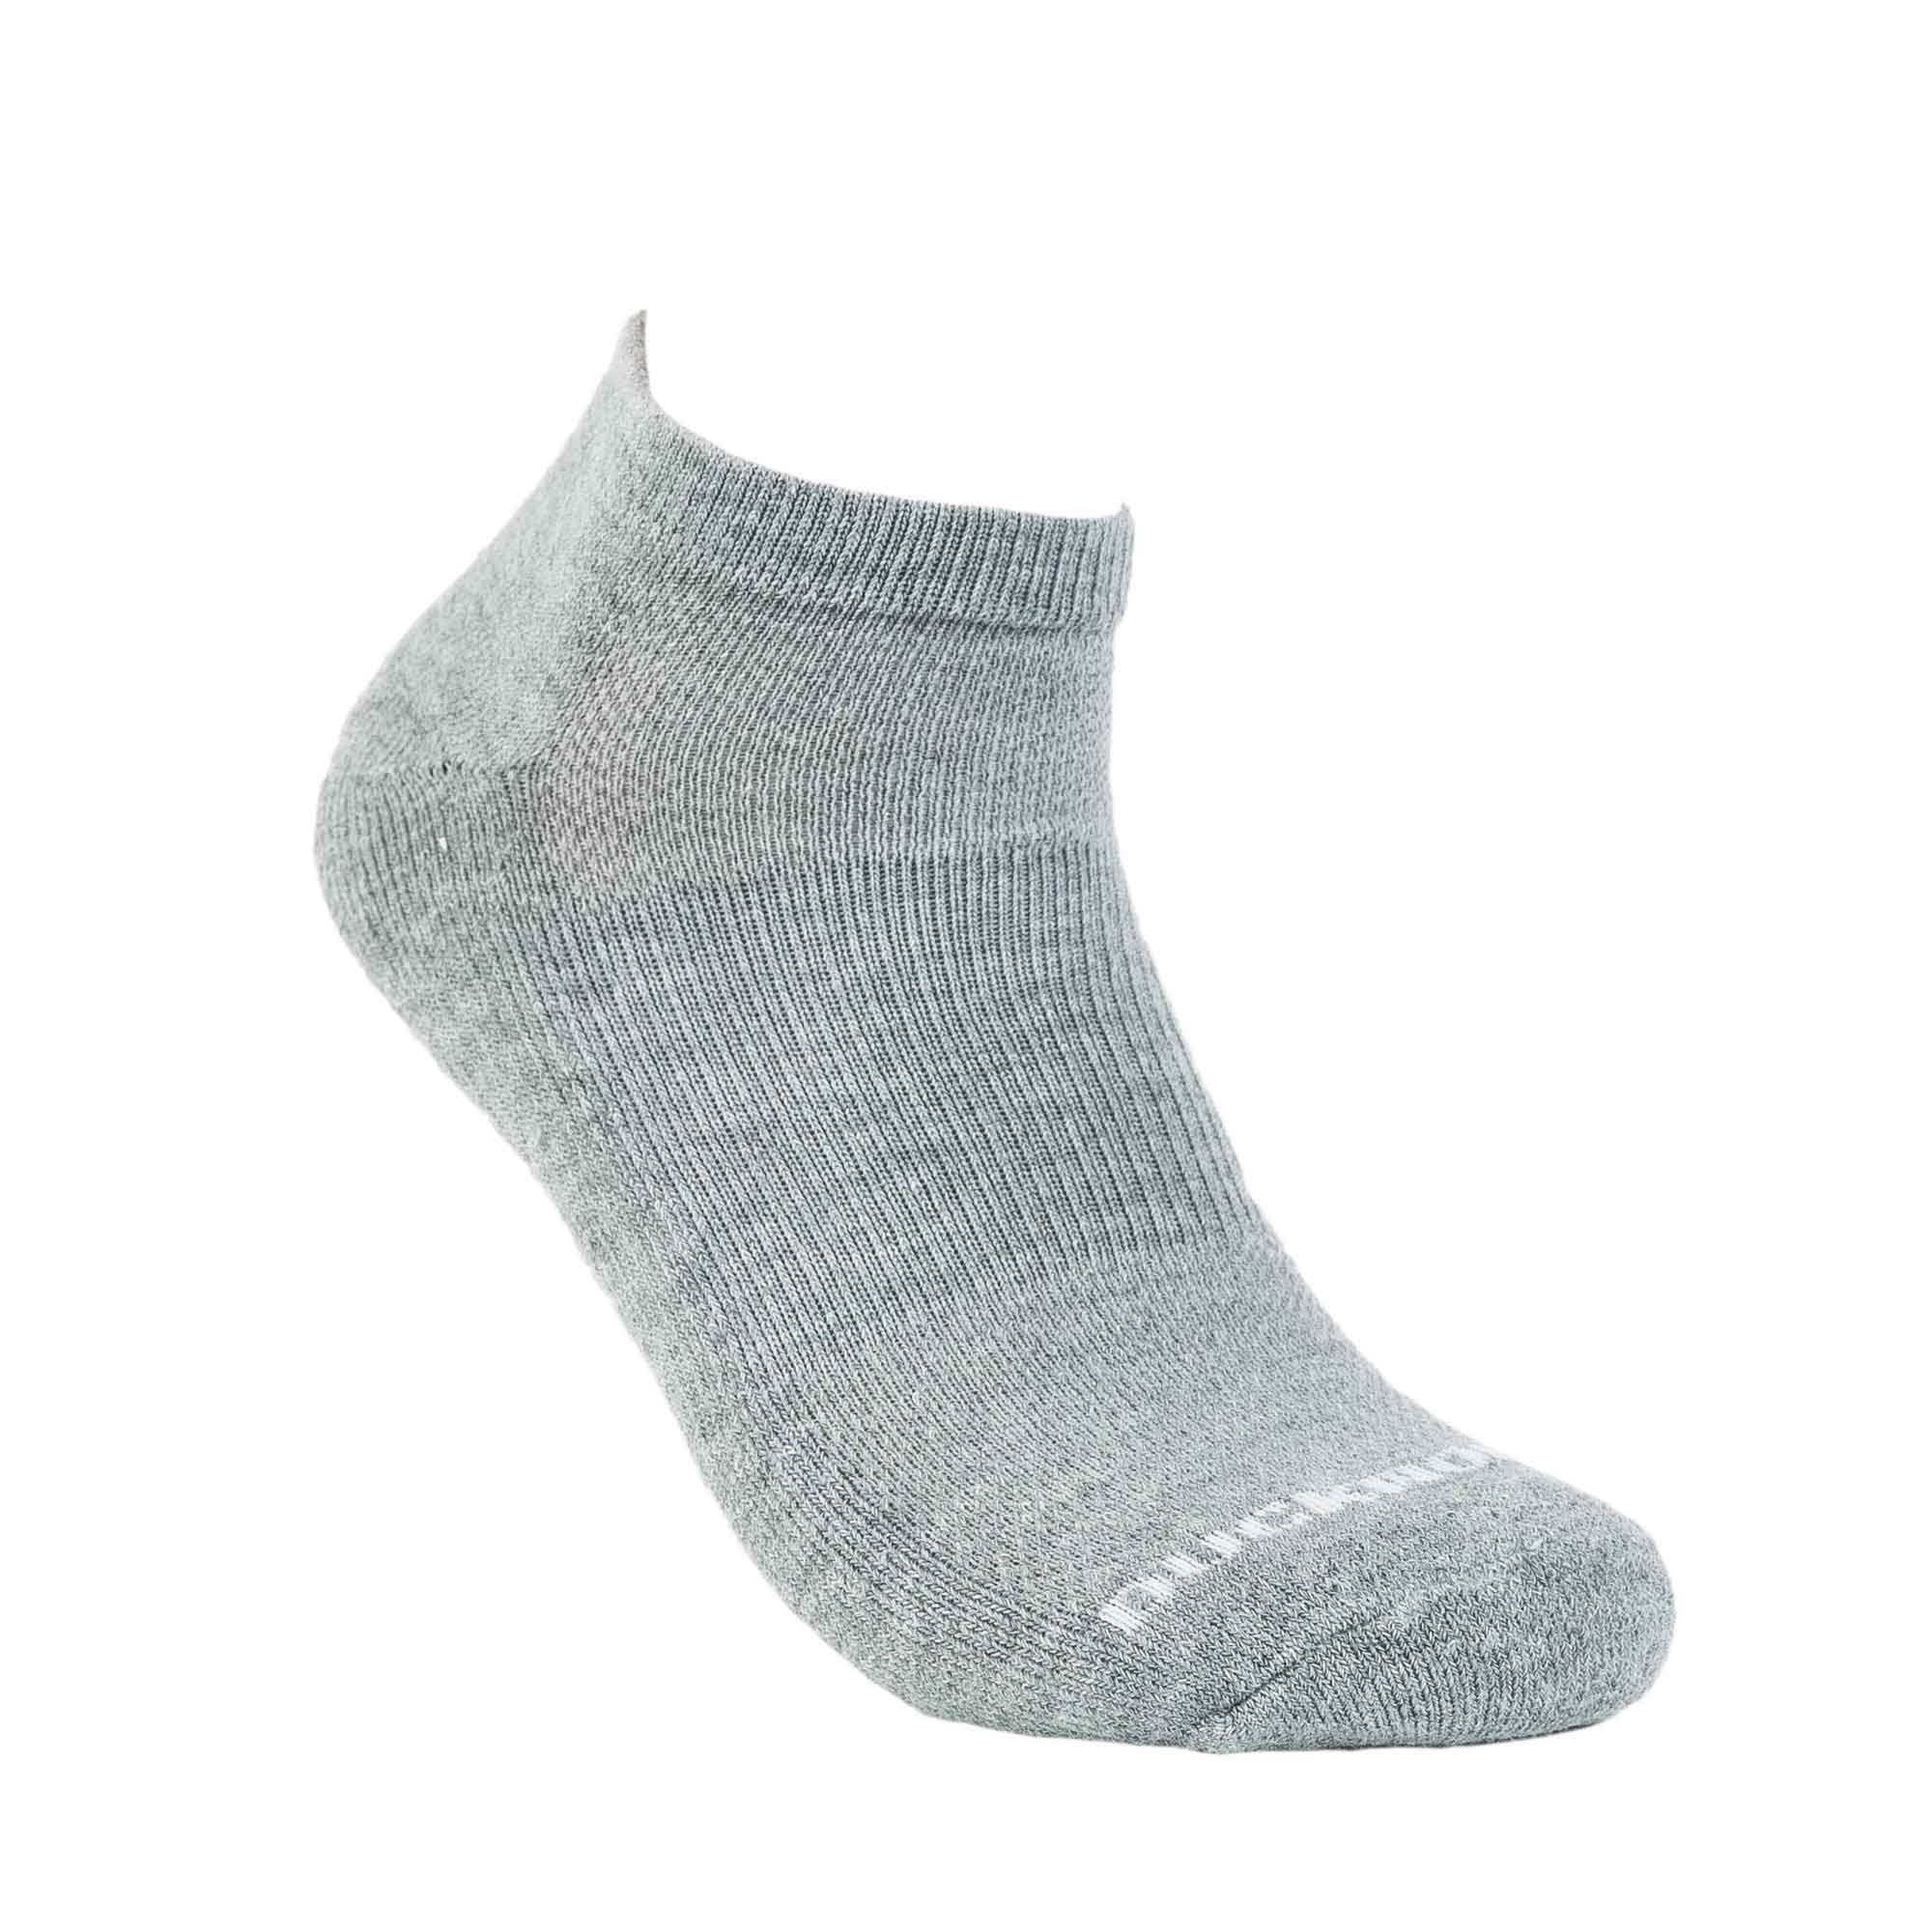 duckworth merino wool ankle sock in gray